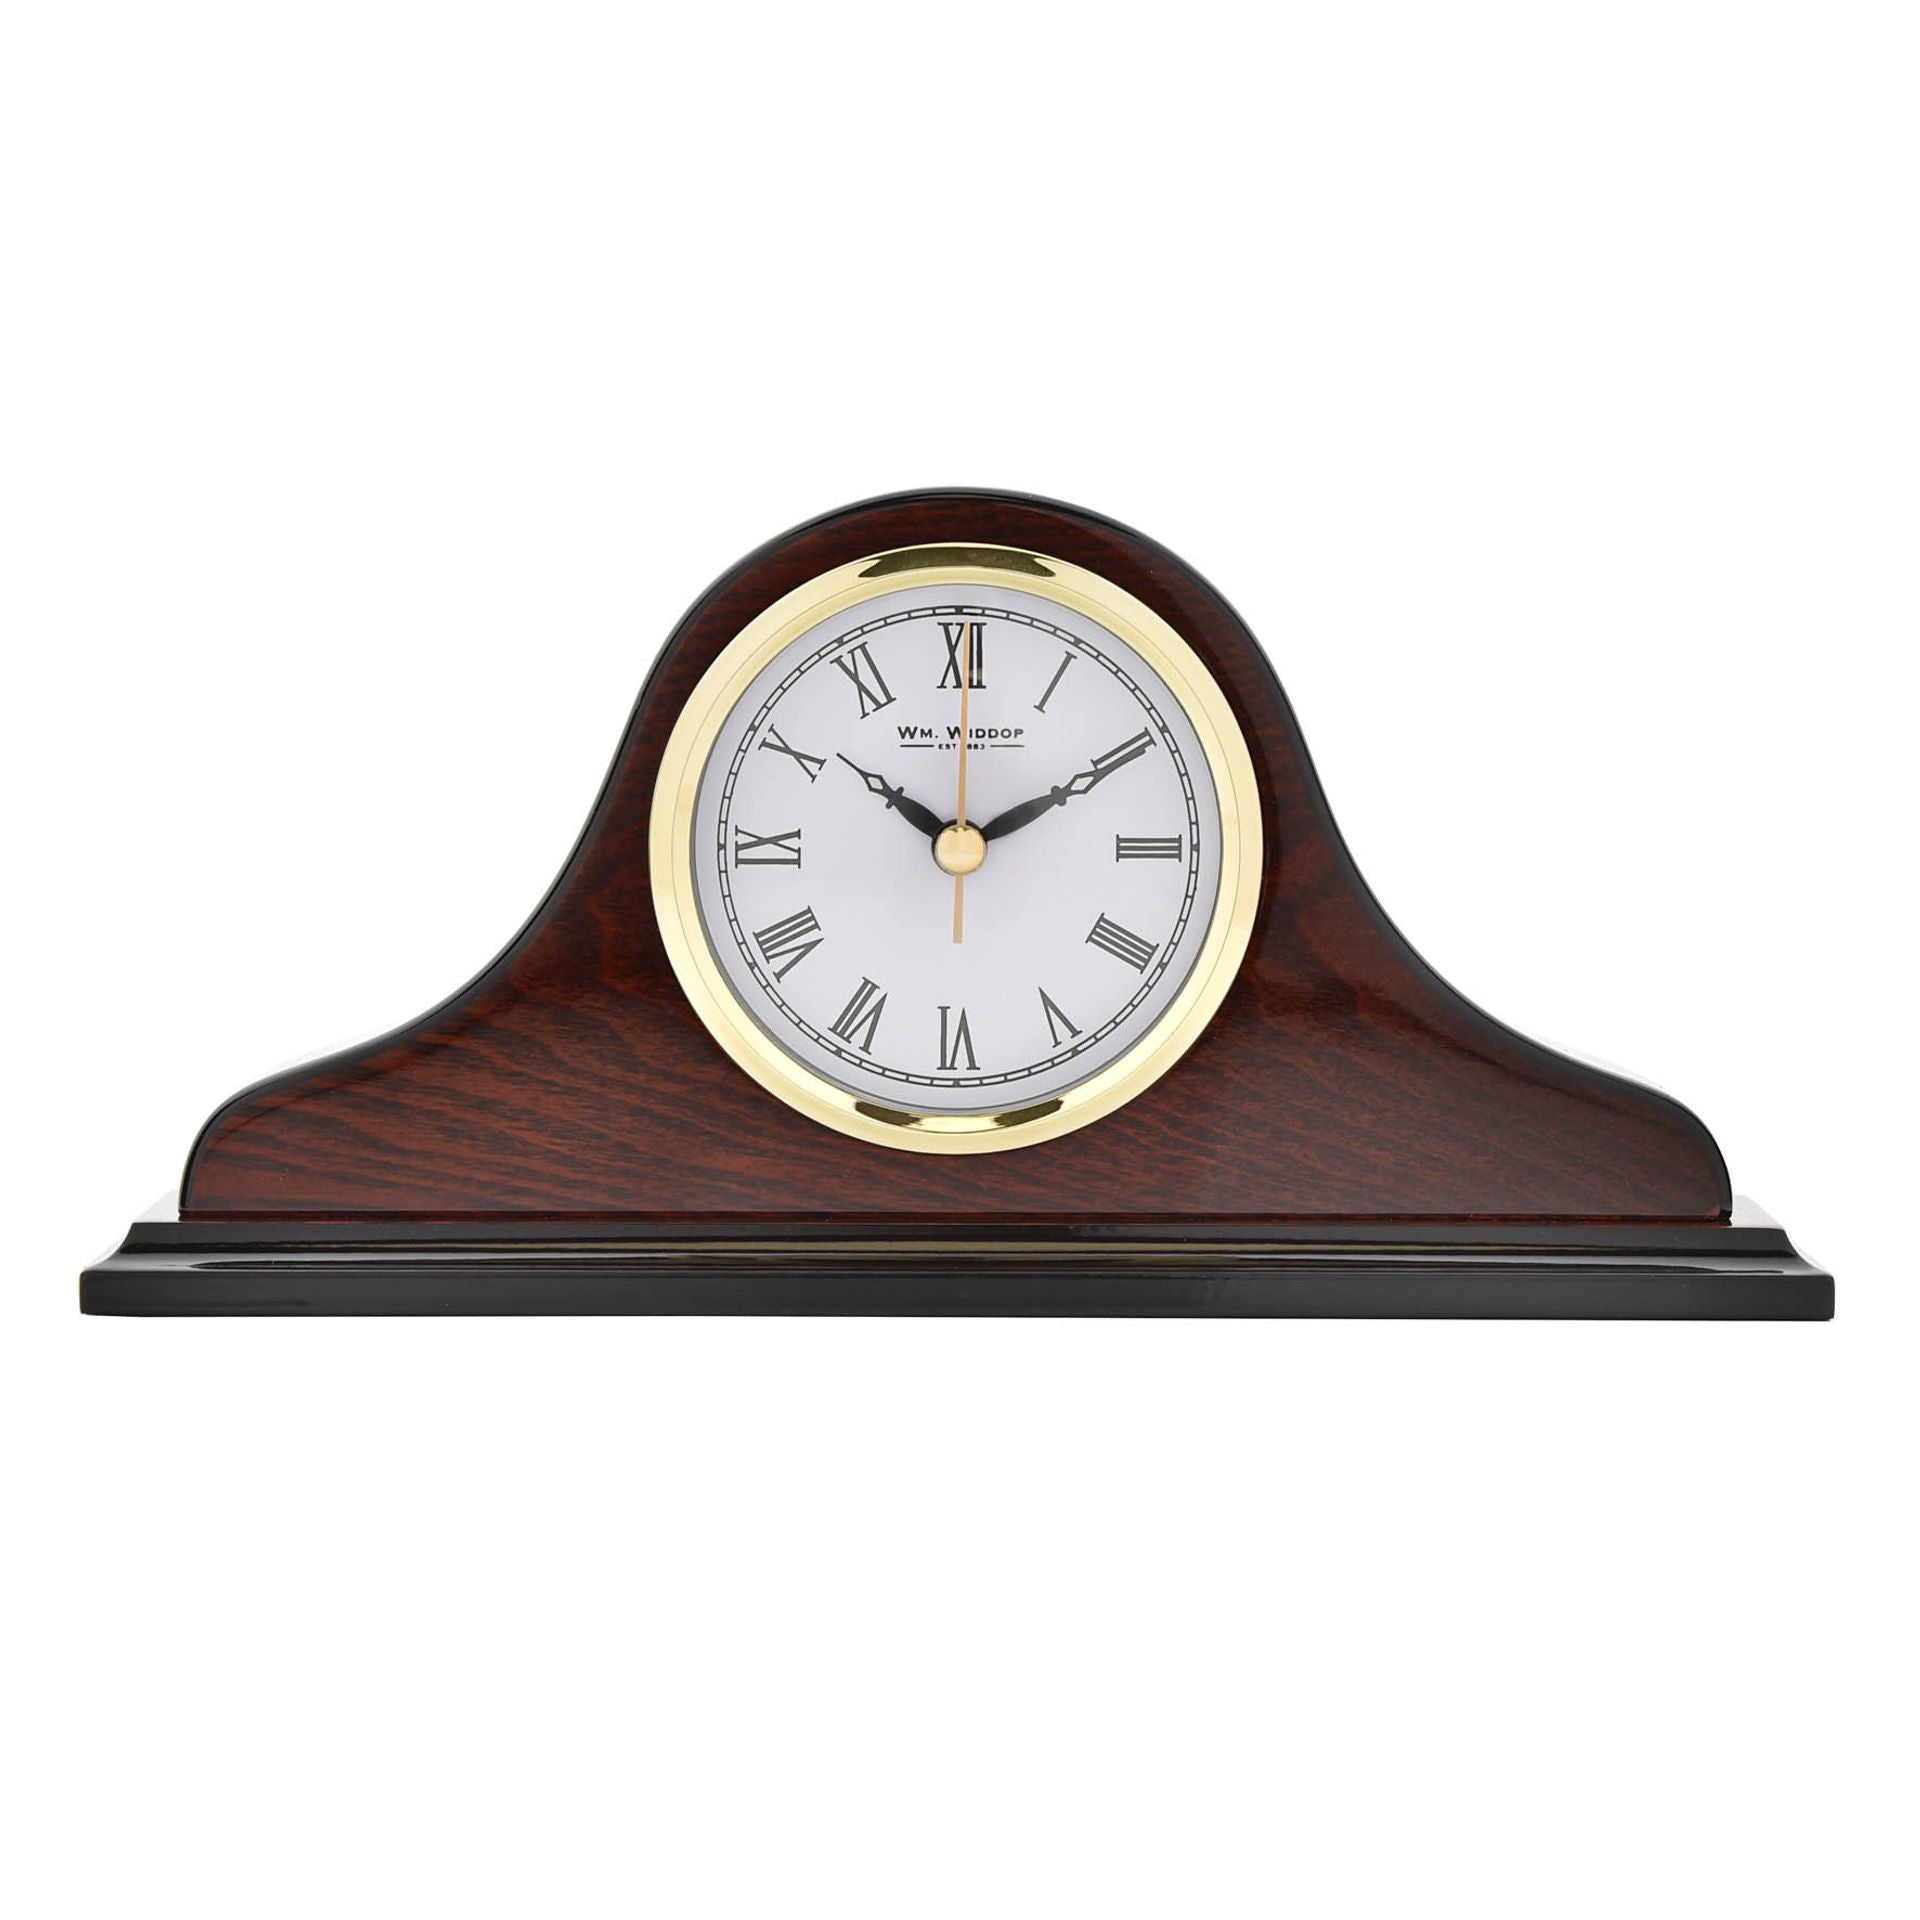 WM. Widdop Polished Wooden Napoleon Shaped Mantel Clock